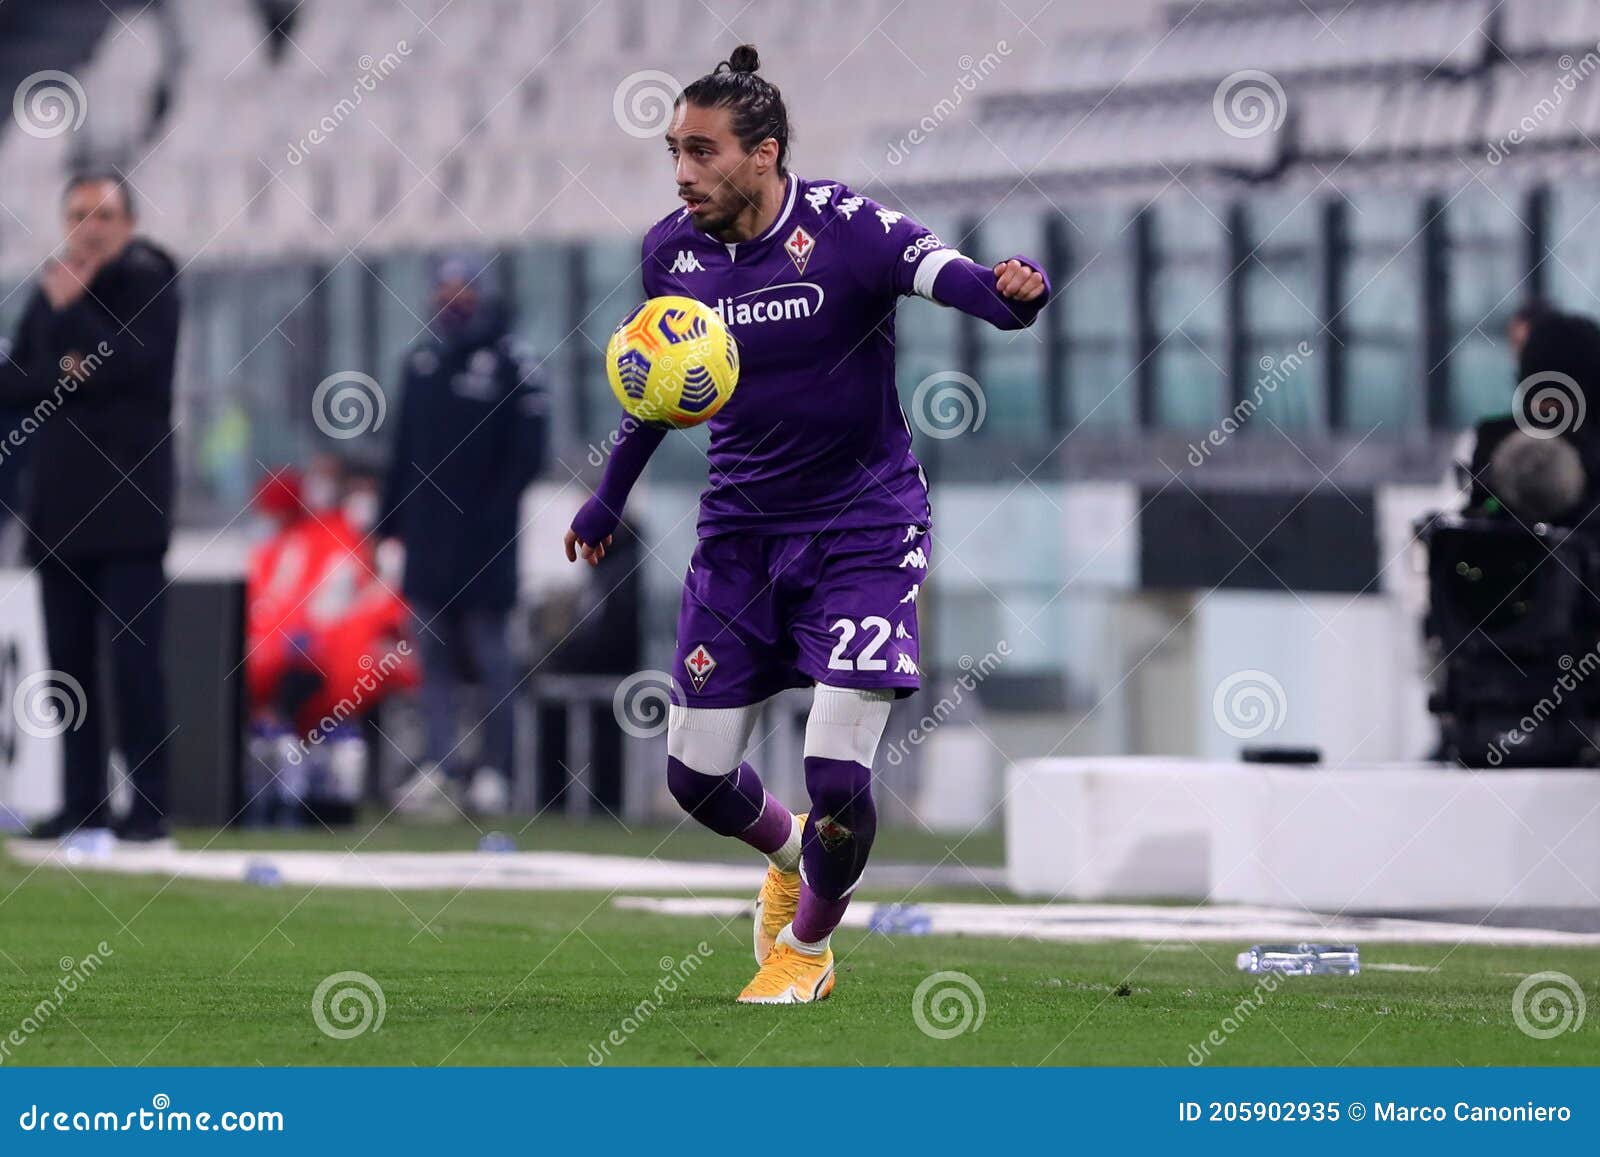 Martin Caceres editorial photo. Image of player, fiorentina - 186230091